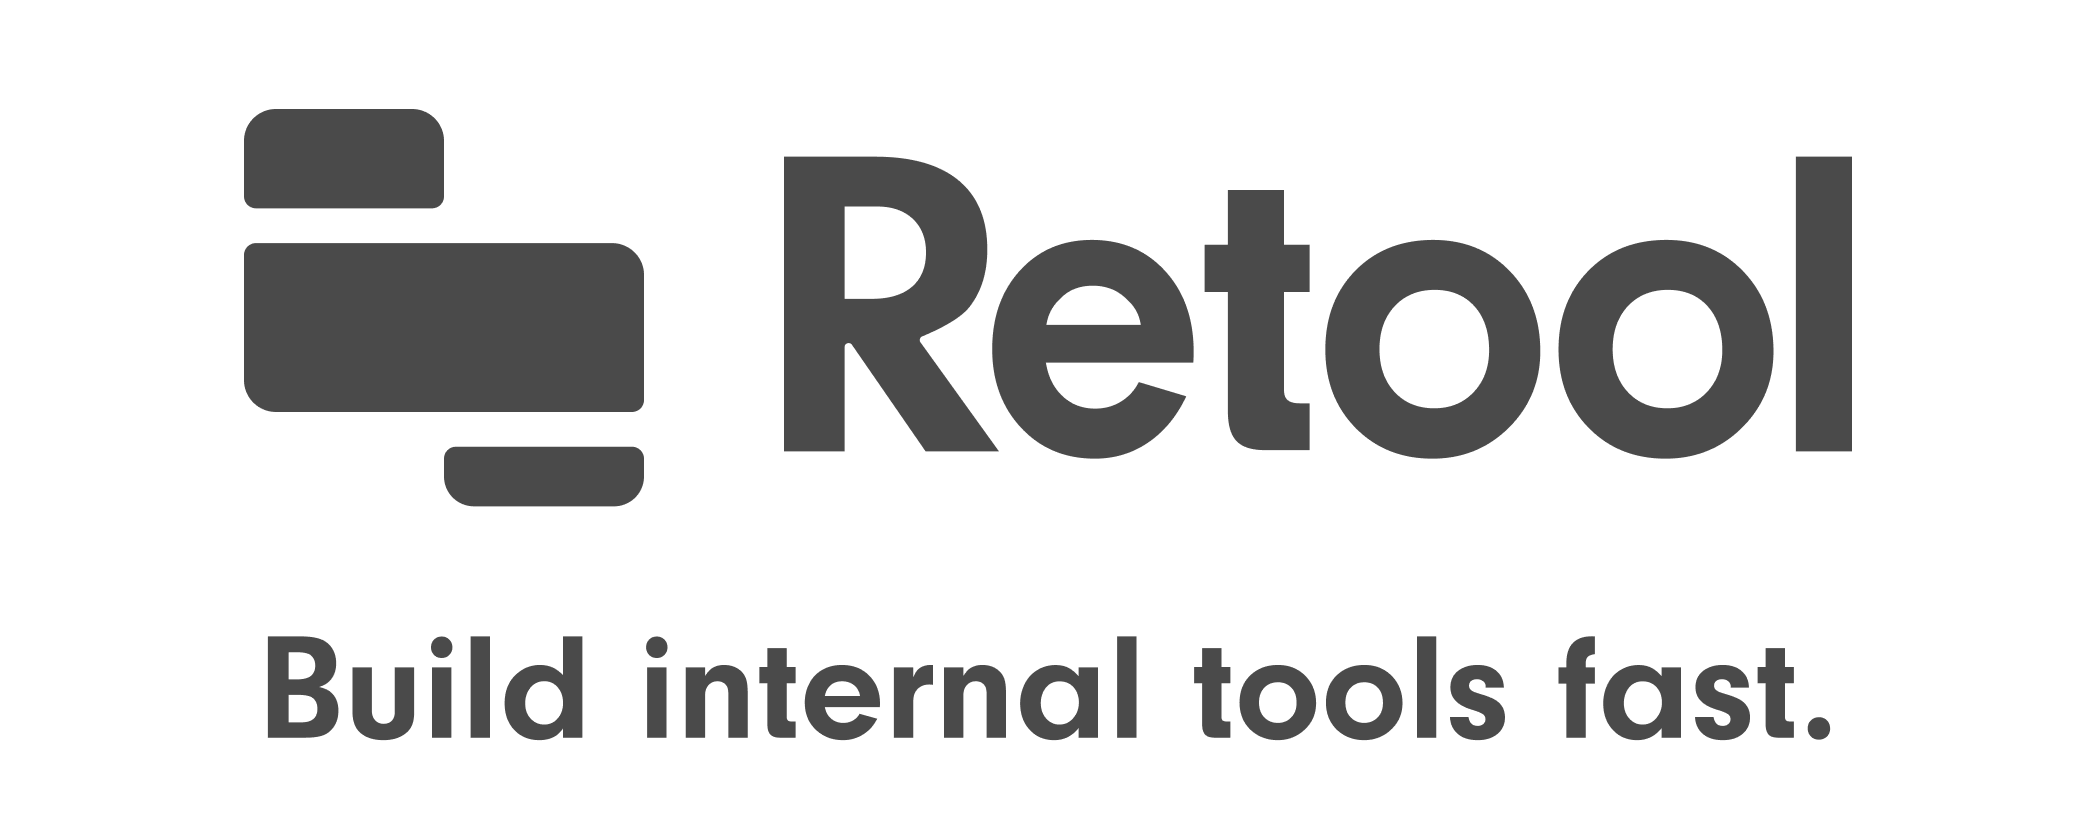 React jobs at Retool